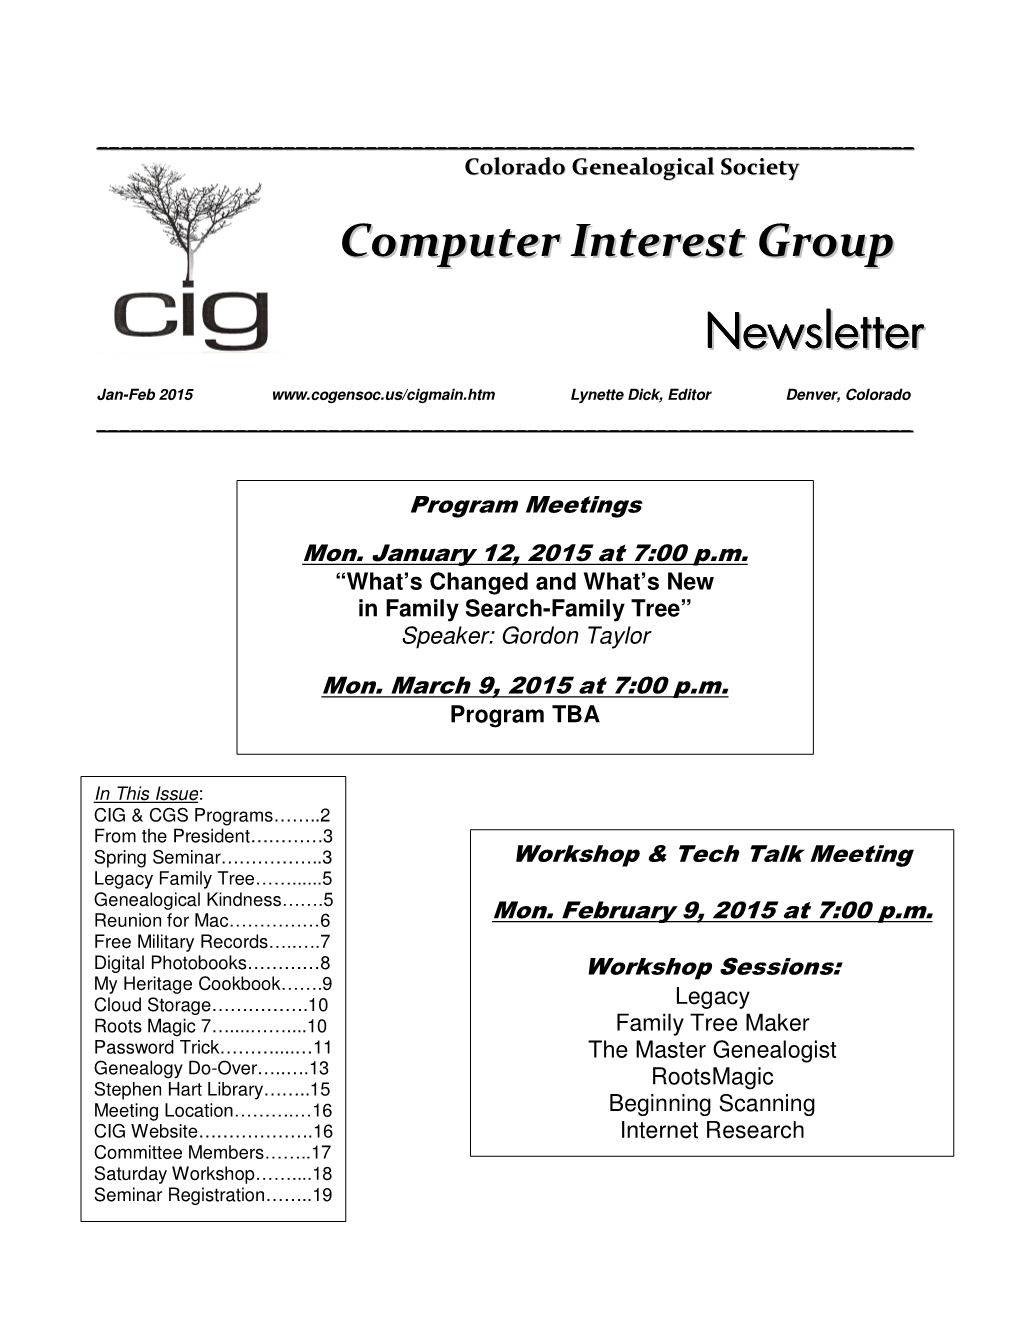 Computer Interest Group Newsletter